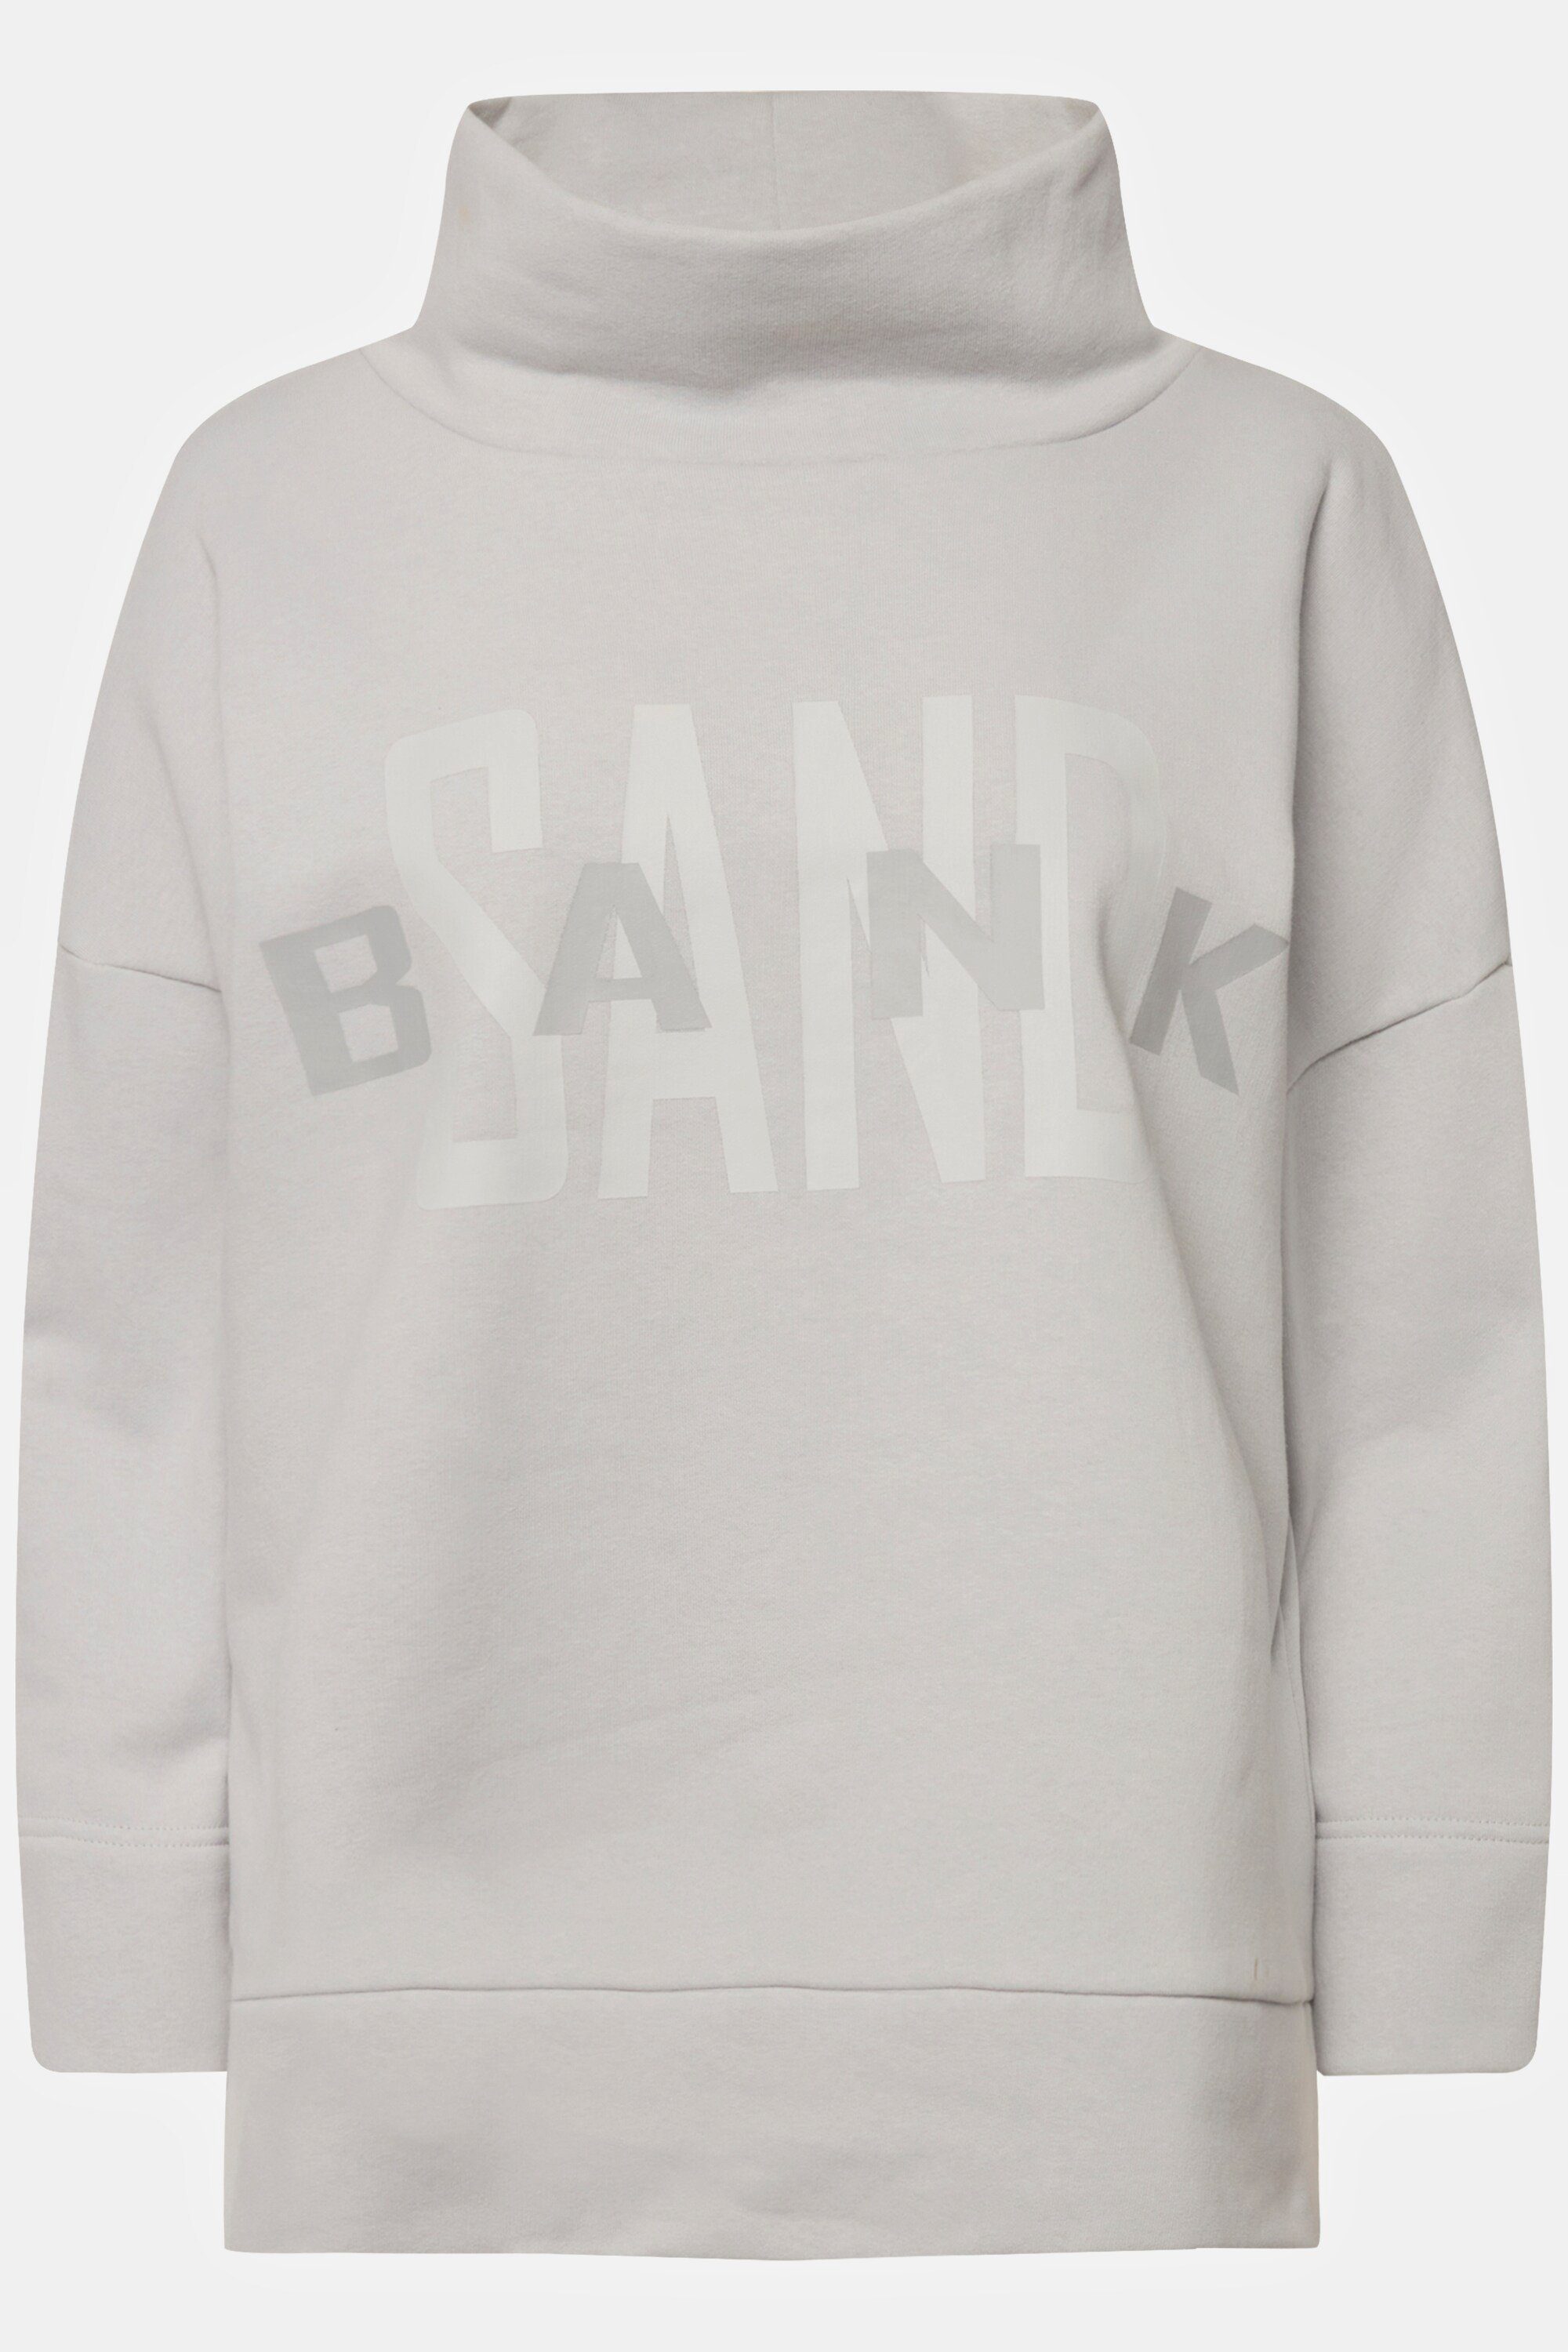 SANDBANK-Druck Stehkragen Laurasøn Sweatshirt Sweatshirt oversized